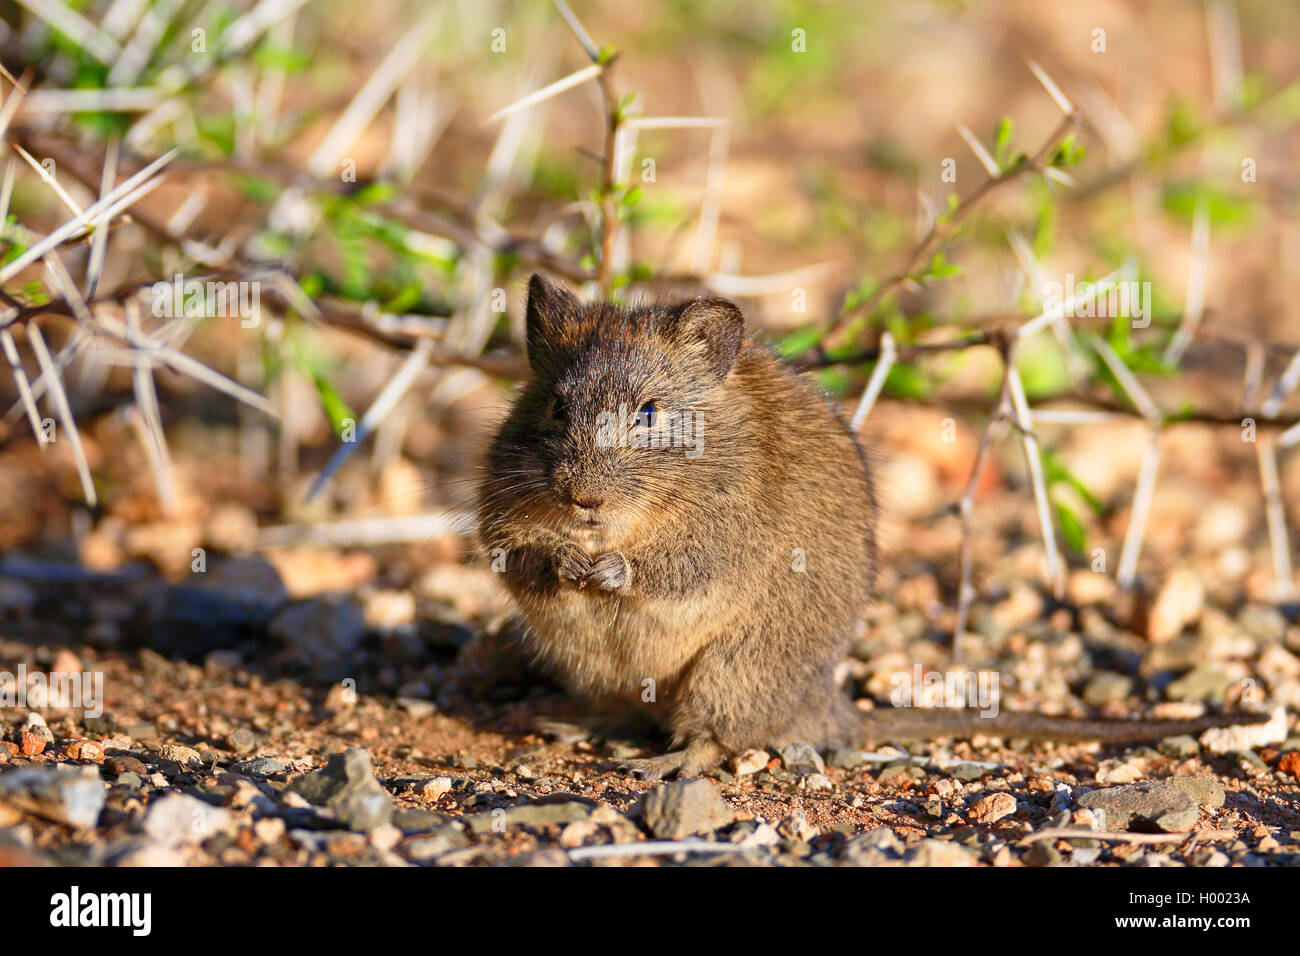 Bush vlei rat, Karoo bush rat (Myotomys unisulcatus), eats at the ground, South Africa, Eastern Cape, Camdeboo National Park Stock Photo